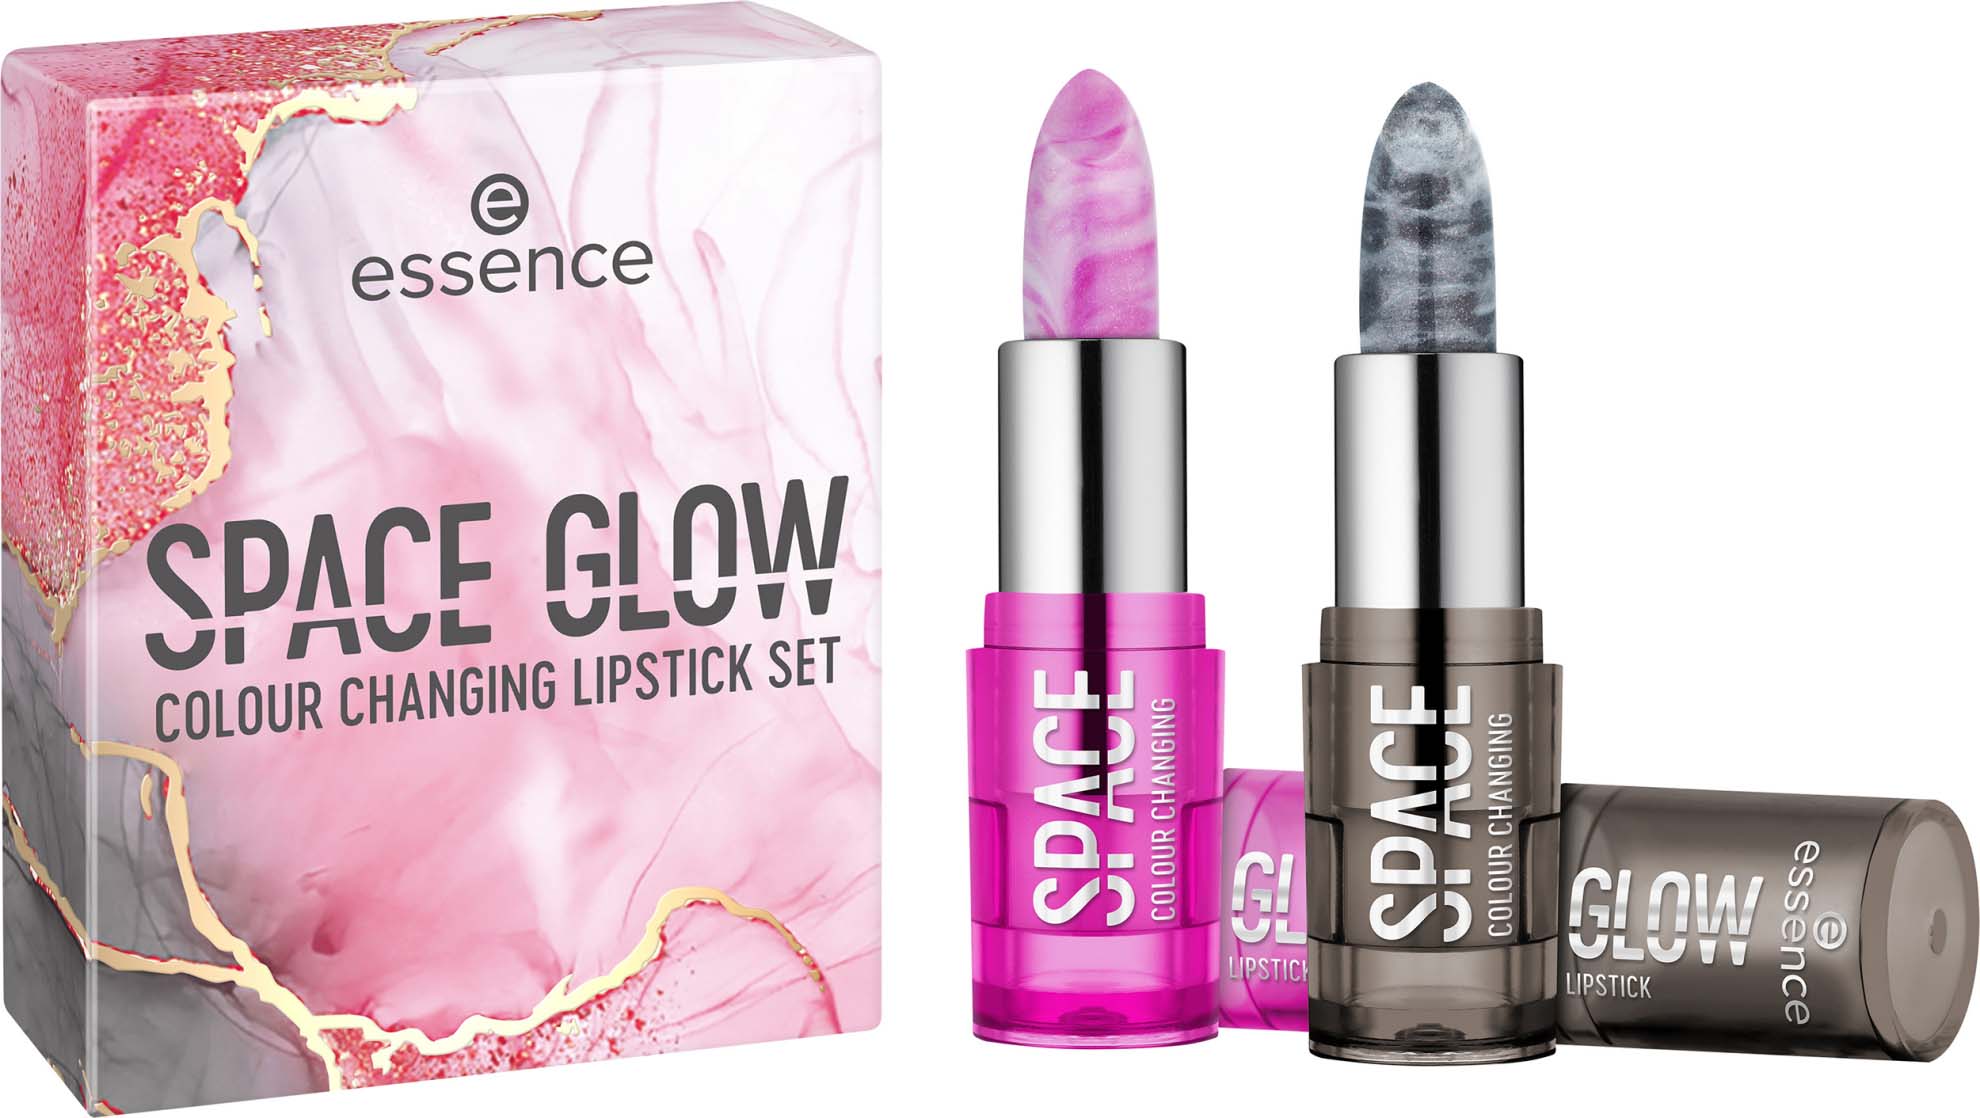 essence Space Glow Changing Colour Set Lipstick